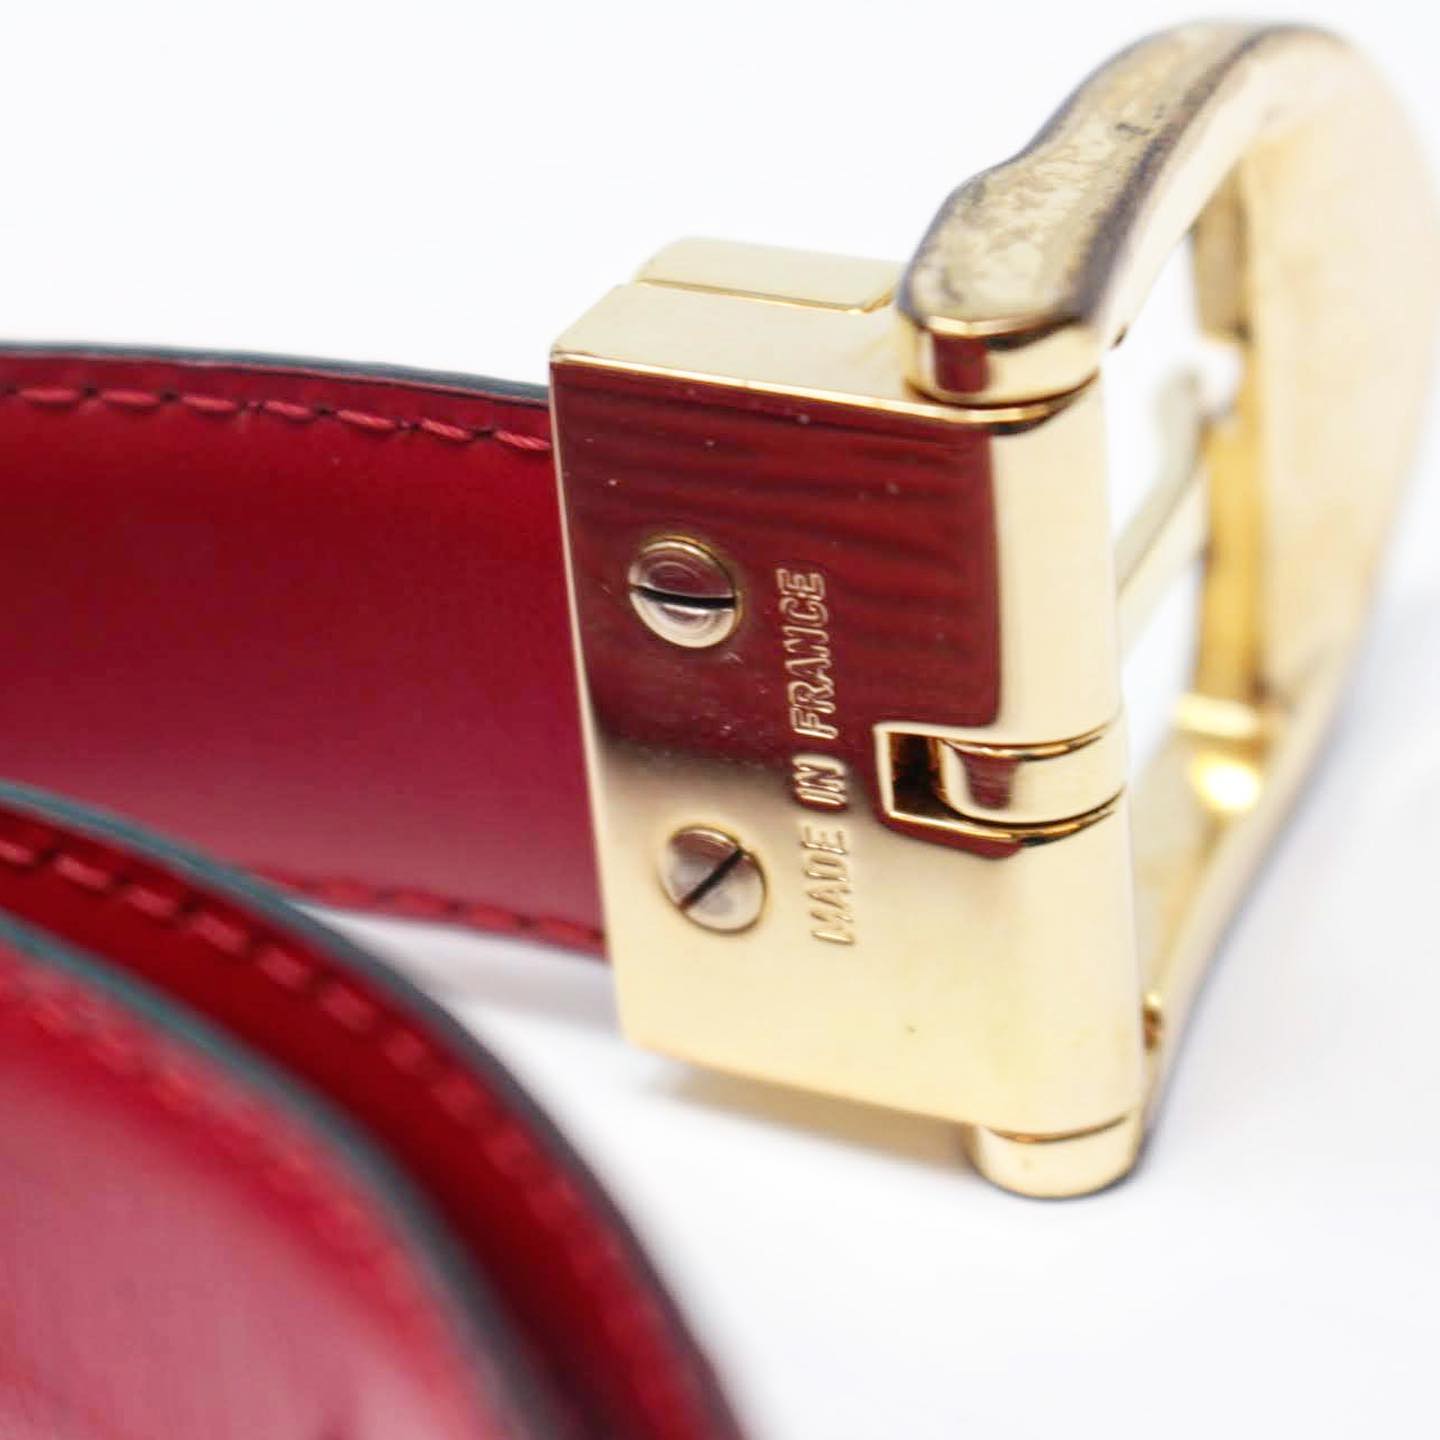 Louis Vuitton Red Epi Leather Ceinture Belt 863440